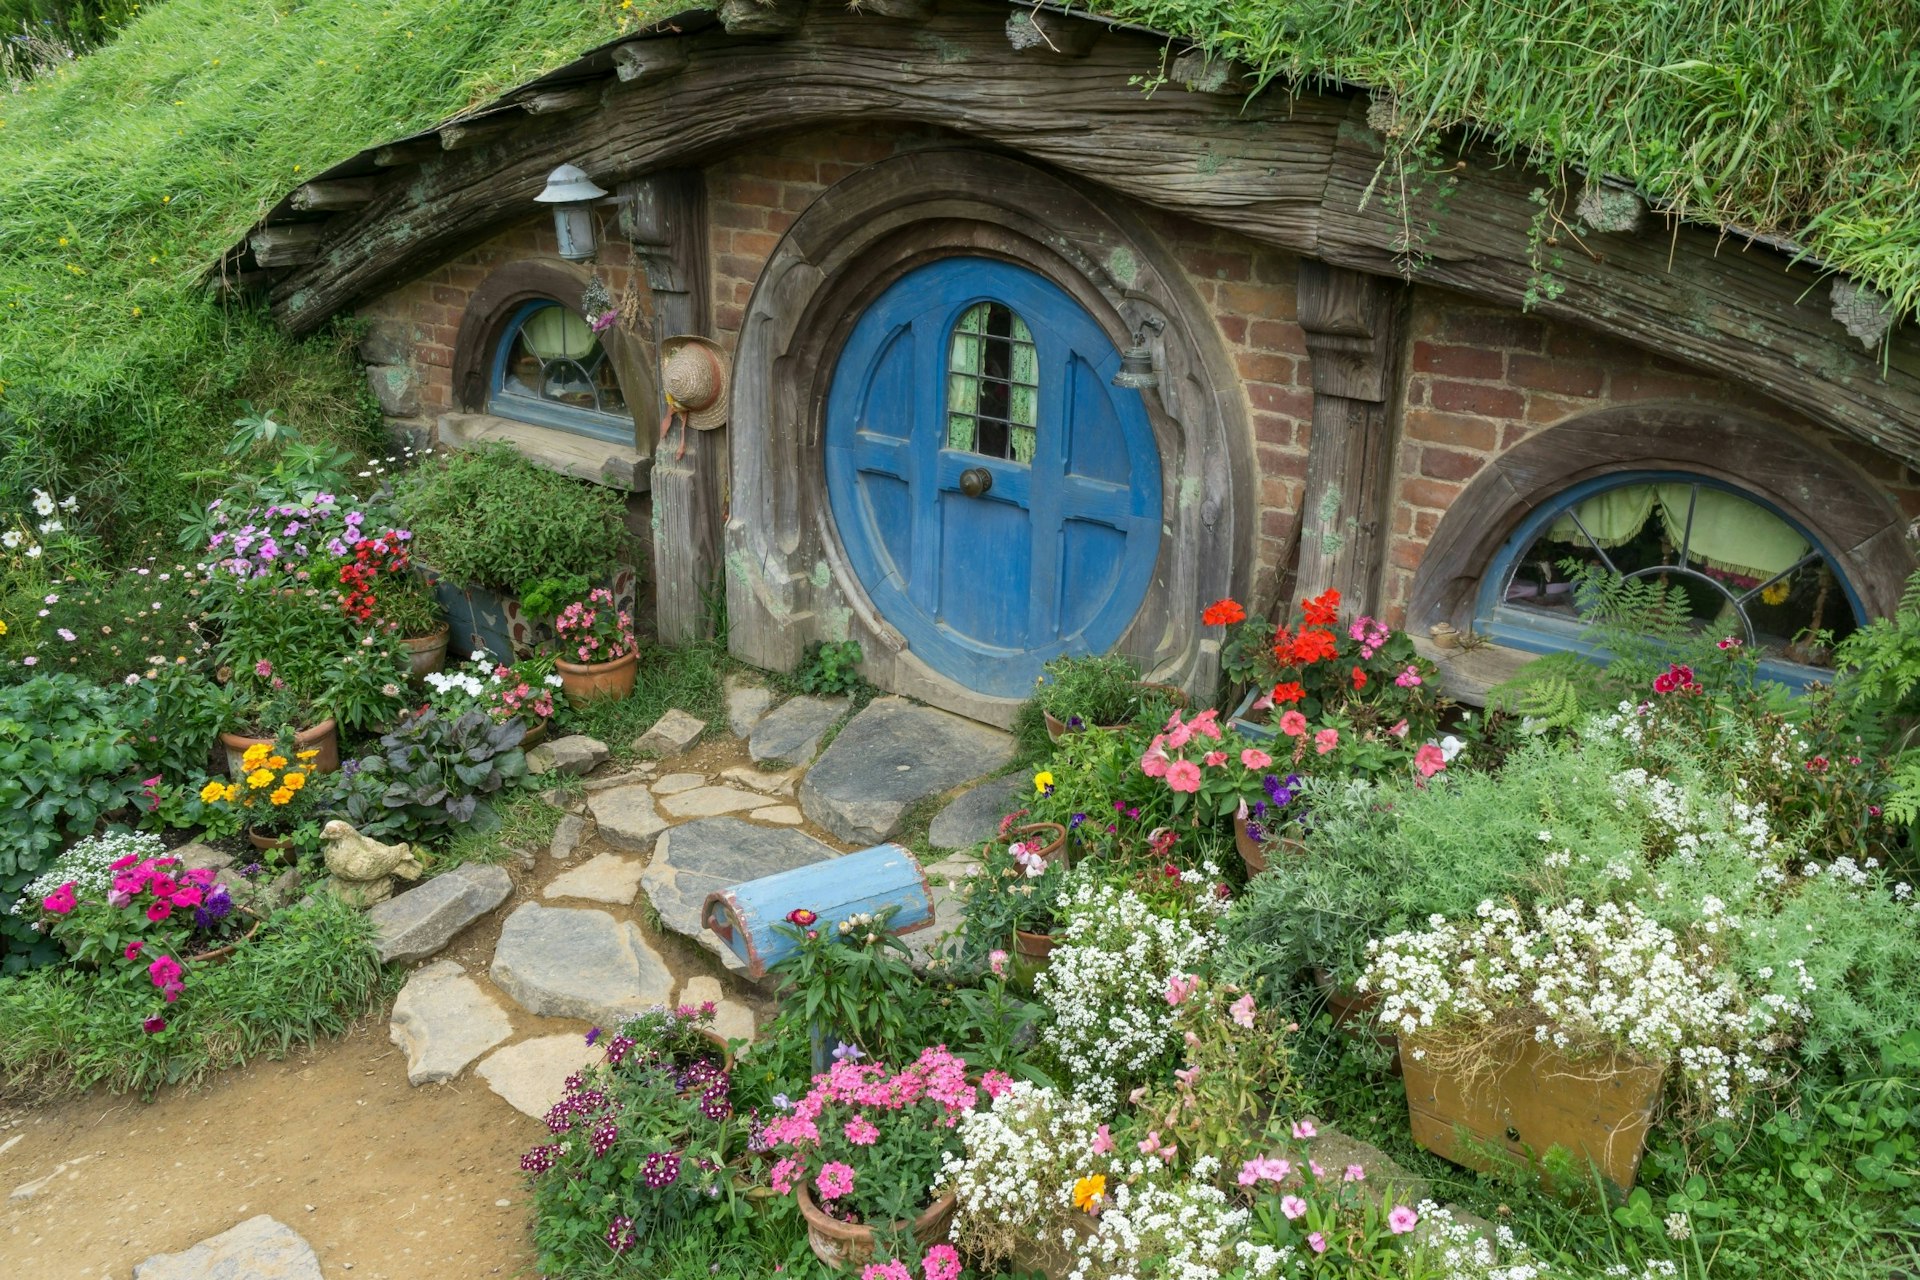 Hobbit holes and hobbit gardens in Hobbiton Movie Set, New Zealand.